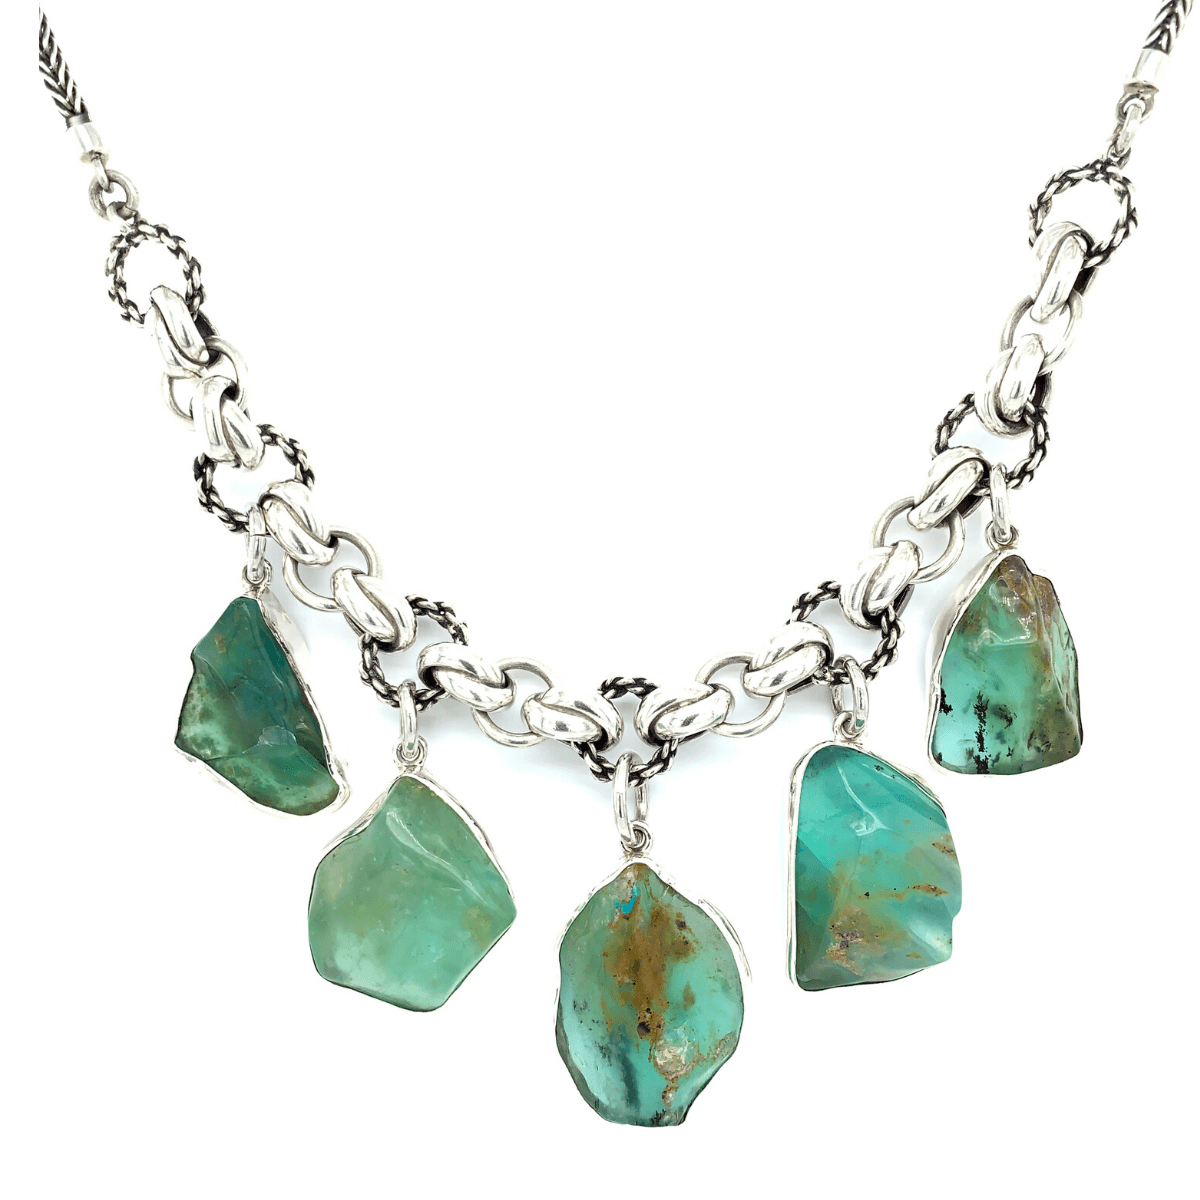 Rough Peruvian Blue Opals & Sterling Silver Links Necklace - Qinti - The Peruvian Shop